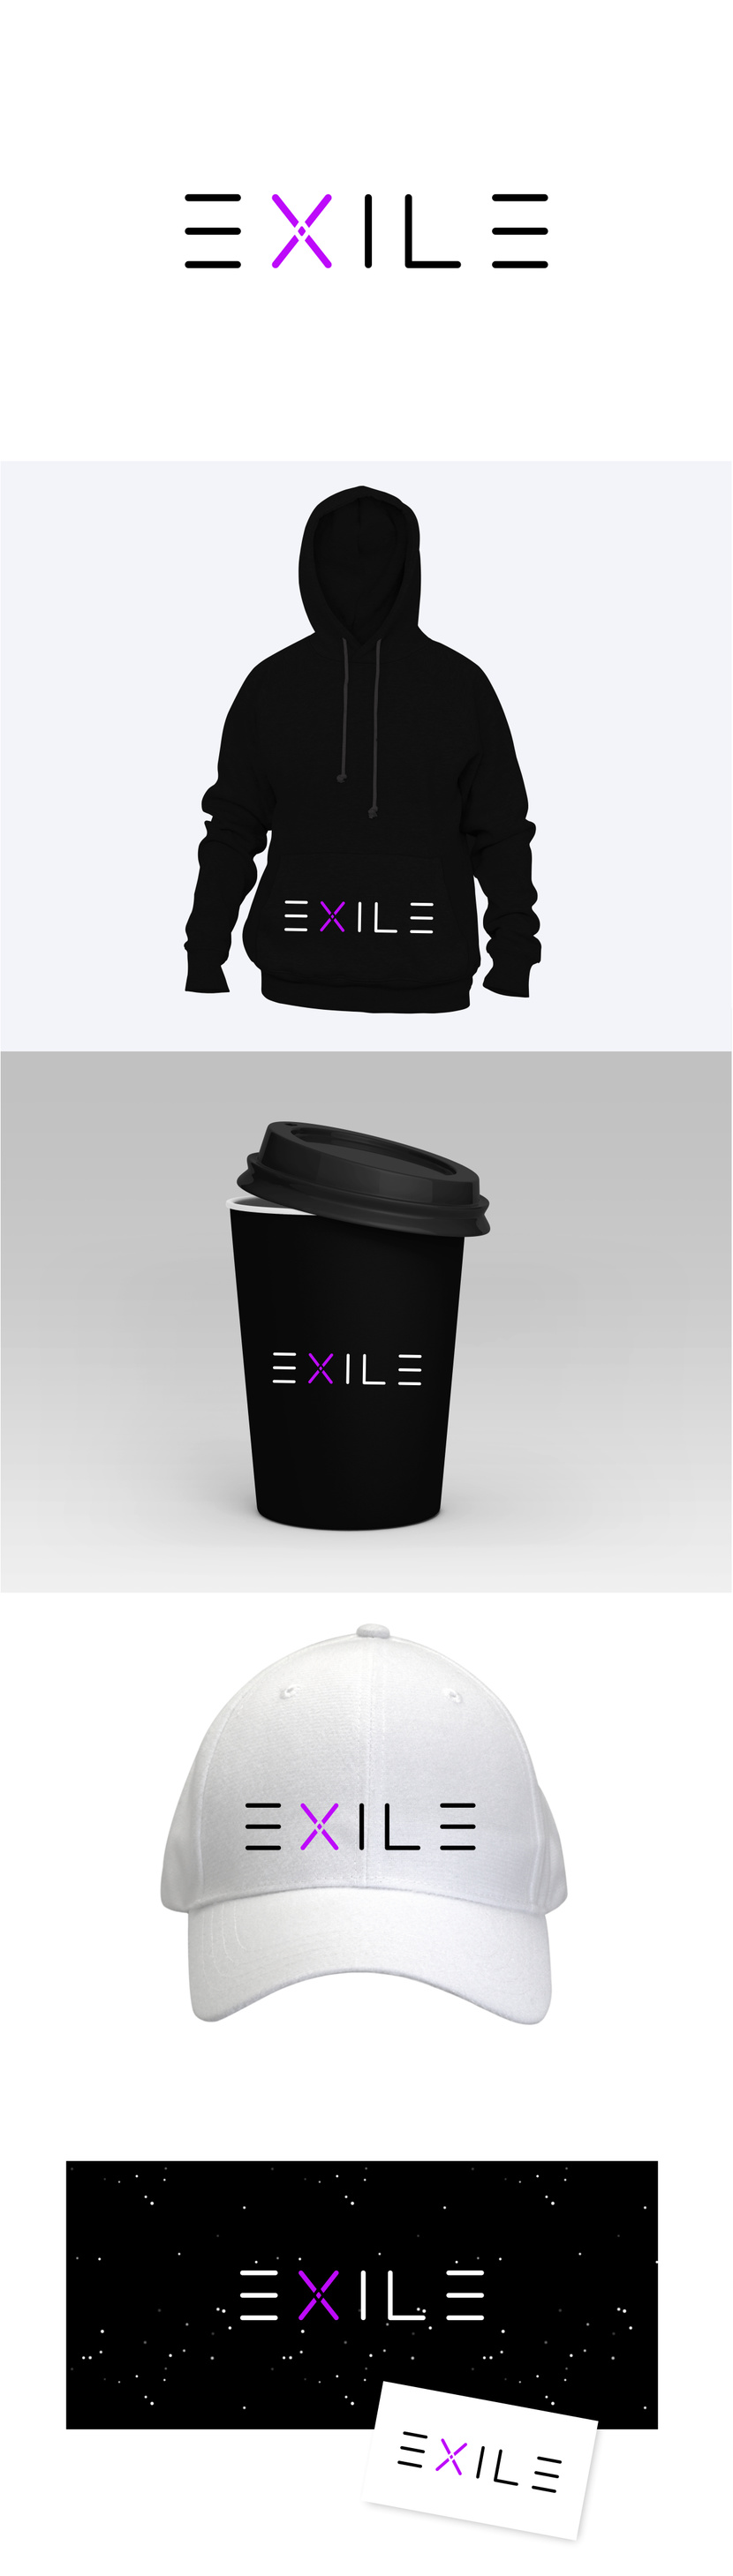 Разработка логотипа и фирменного стиля EXILE  -  автор EVGENIA ZHURANOVA